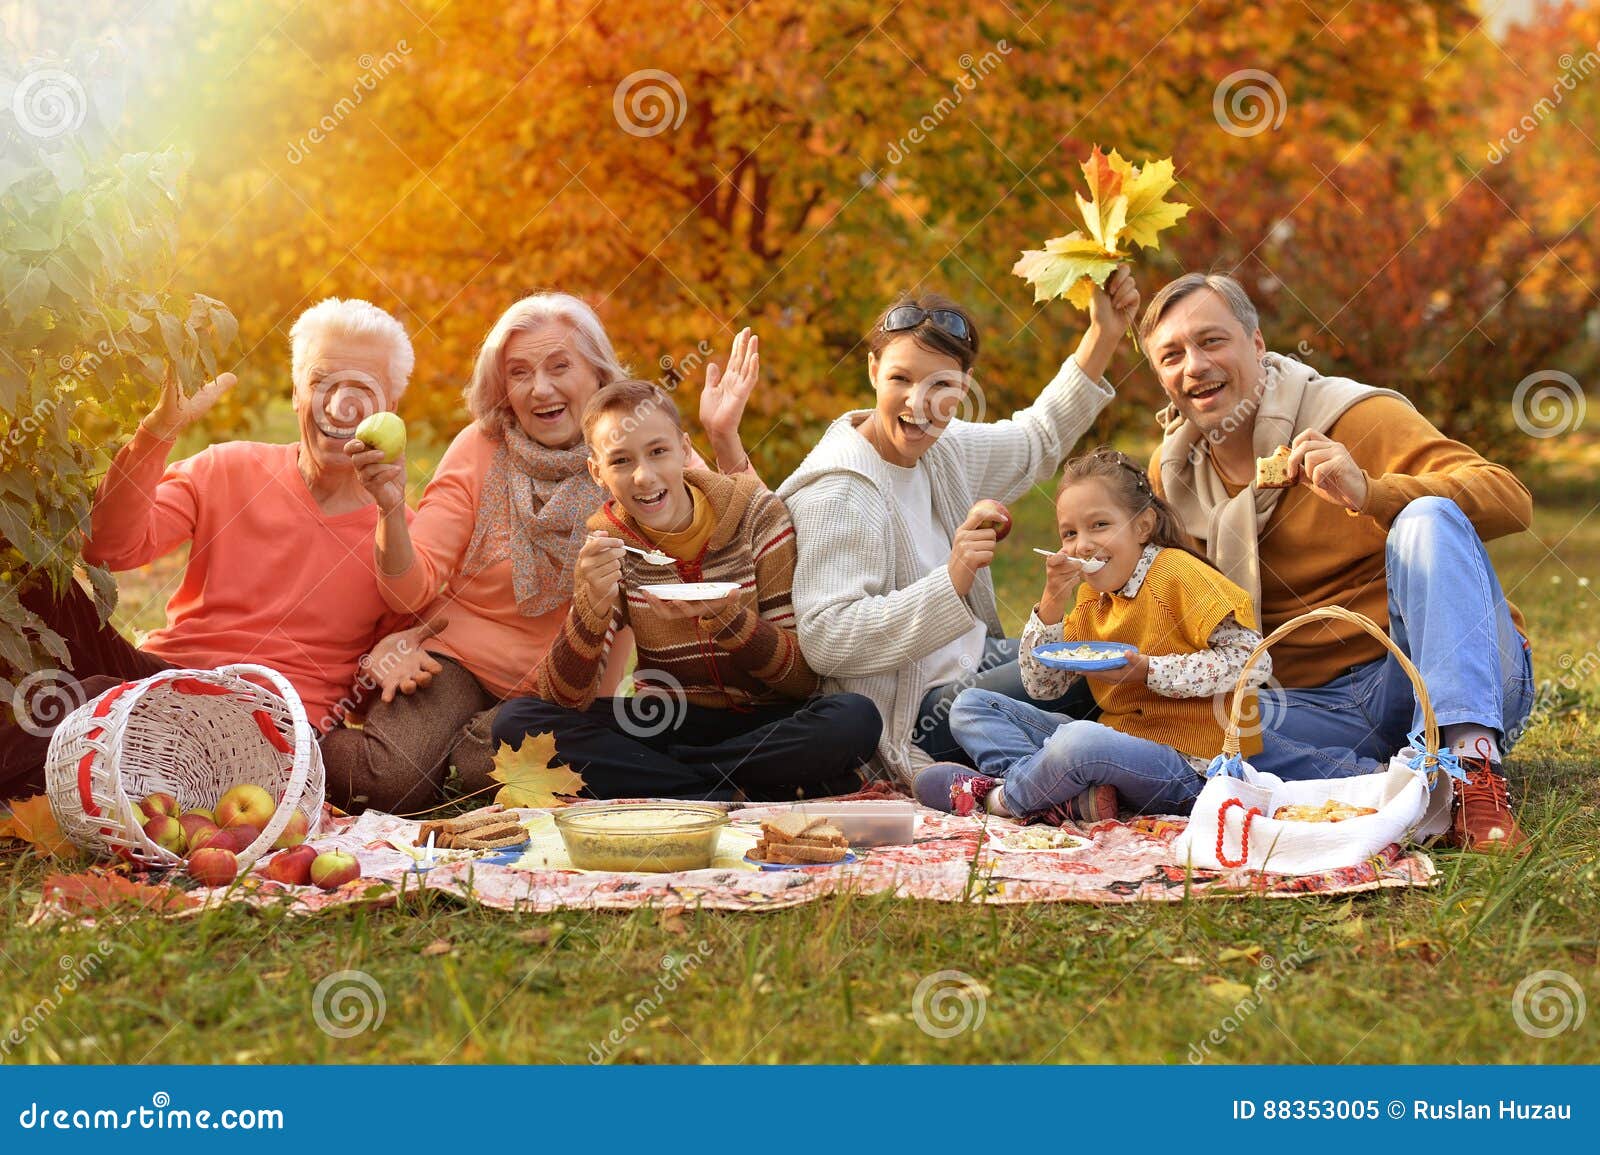 big happy family on picnic